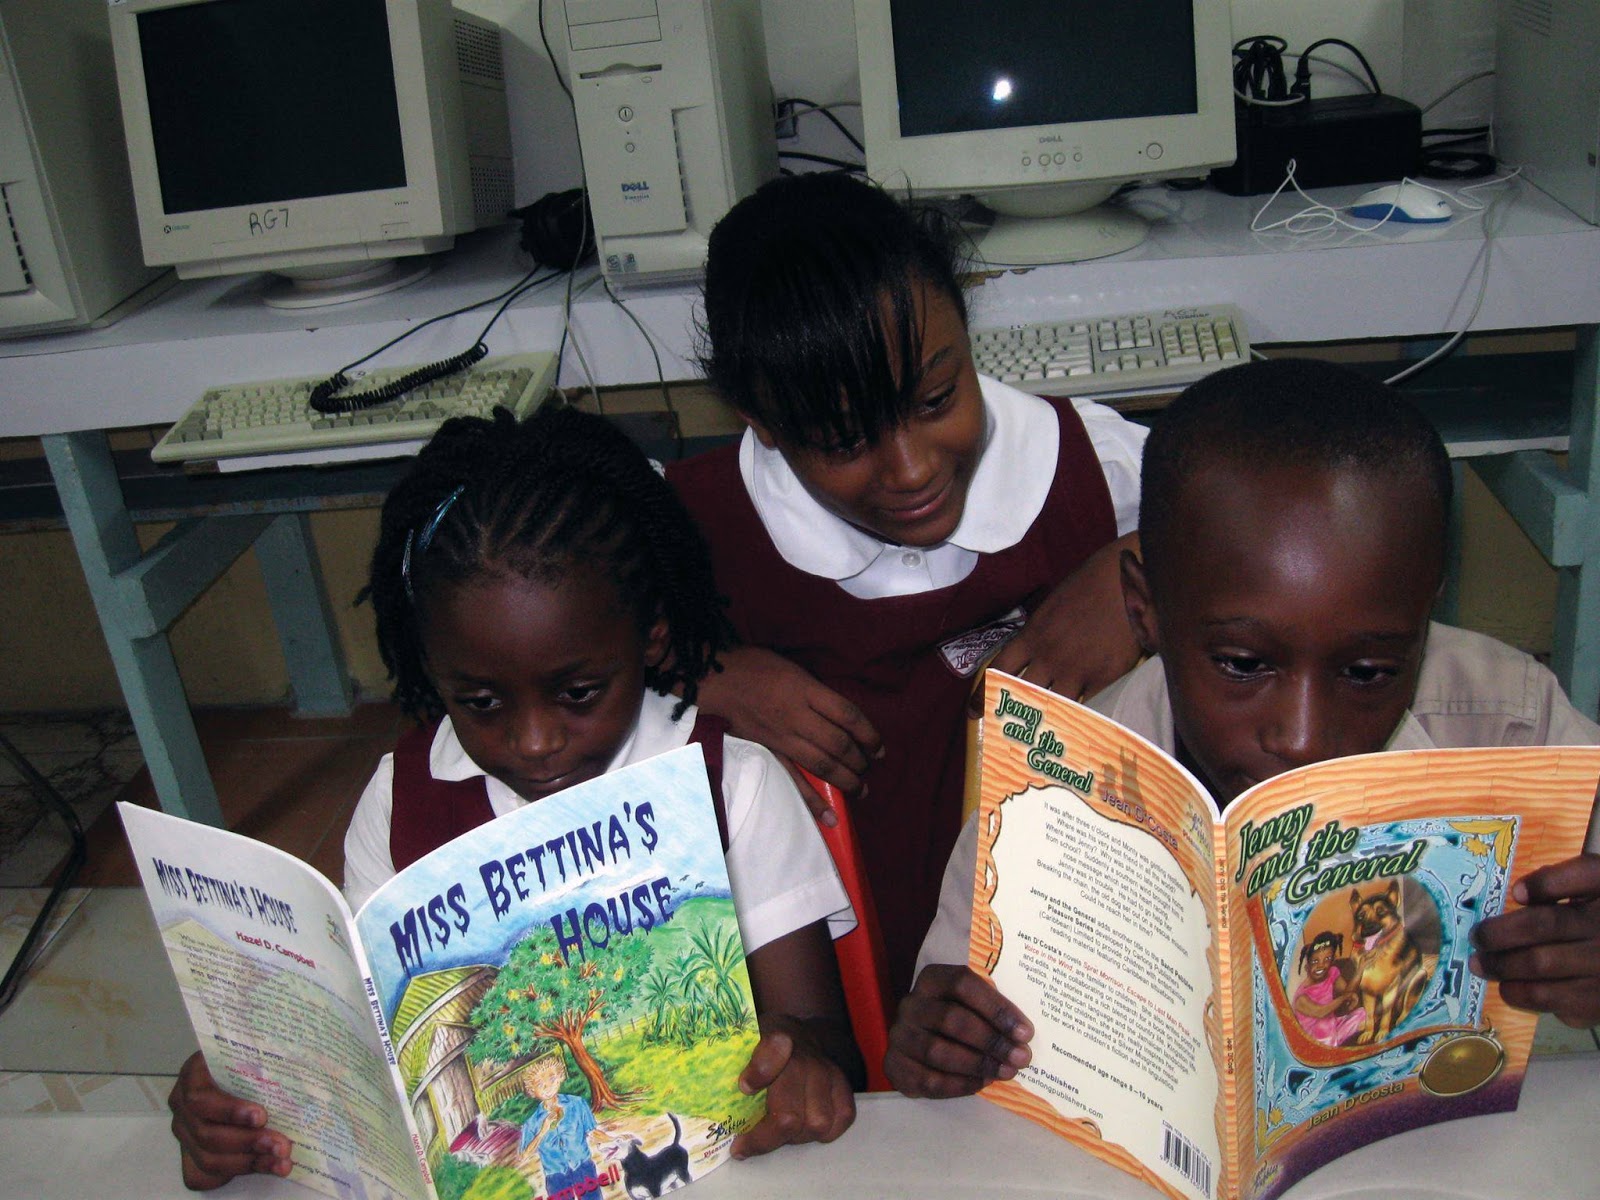 Caribbean Children's Fiction: Caribbean children's fiction